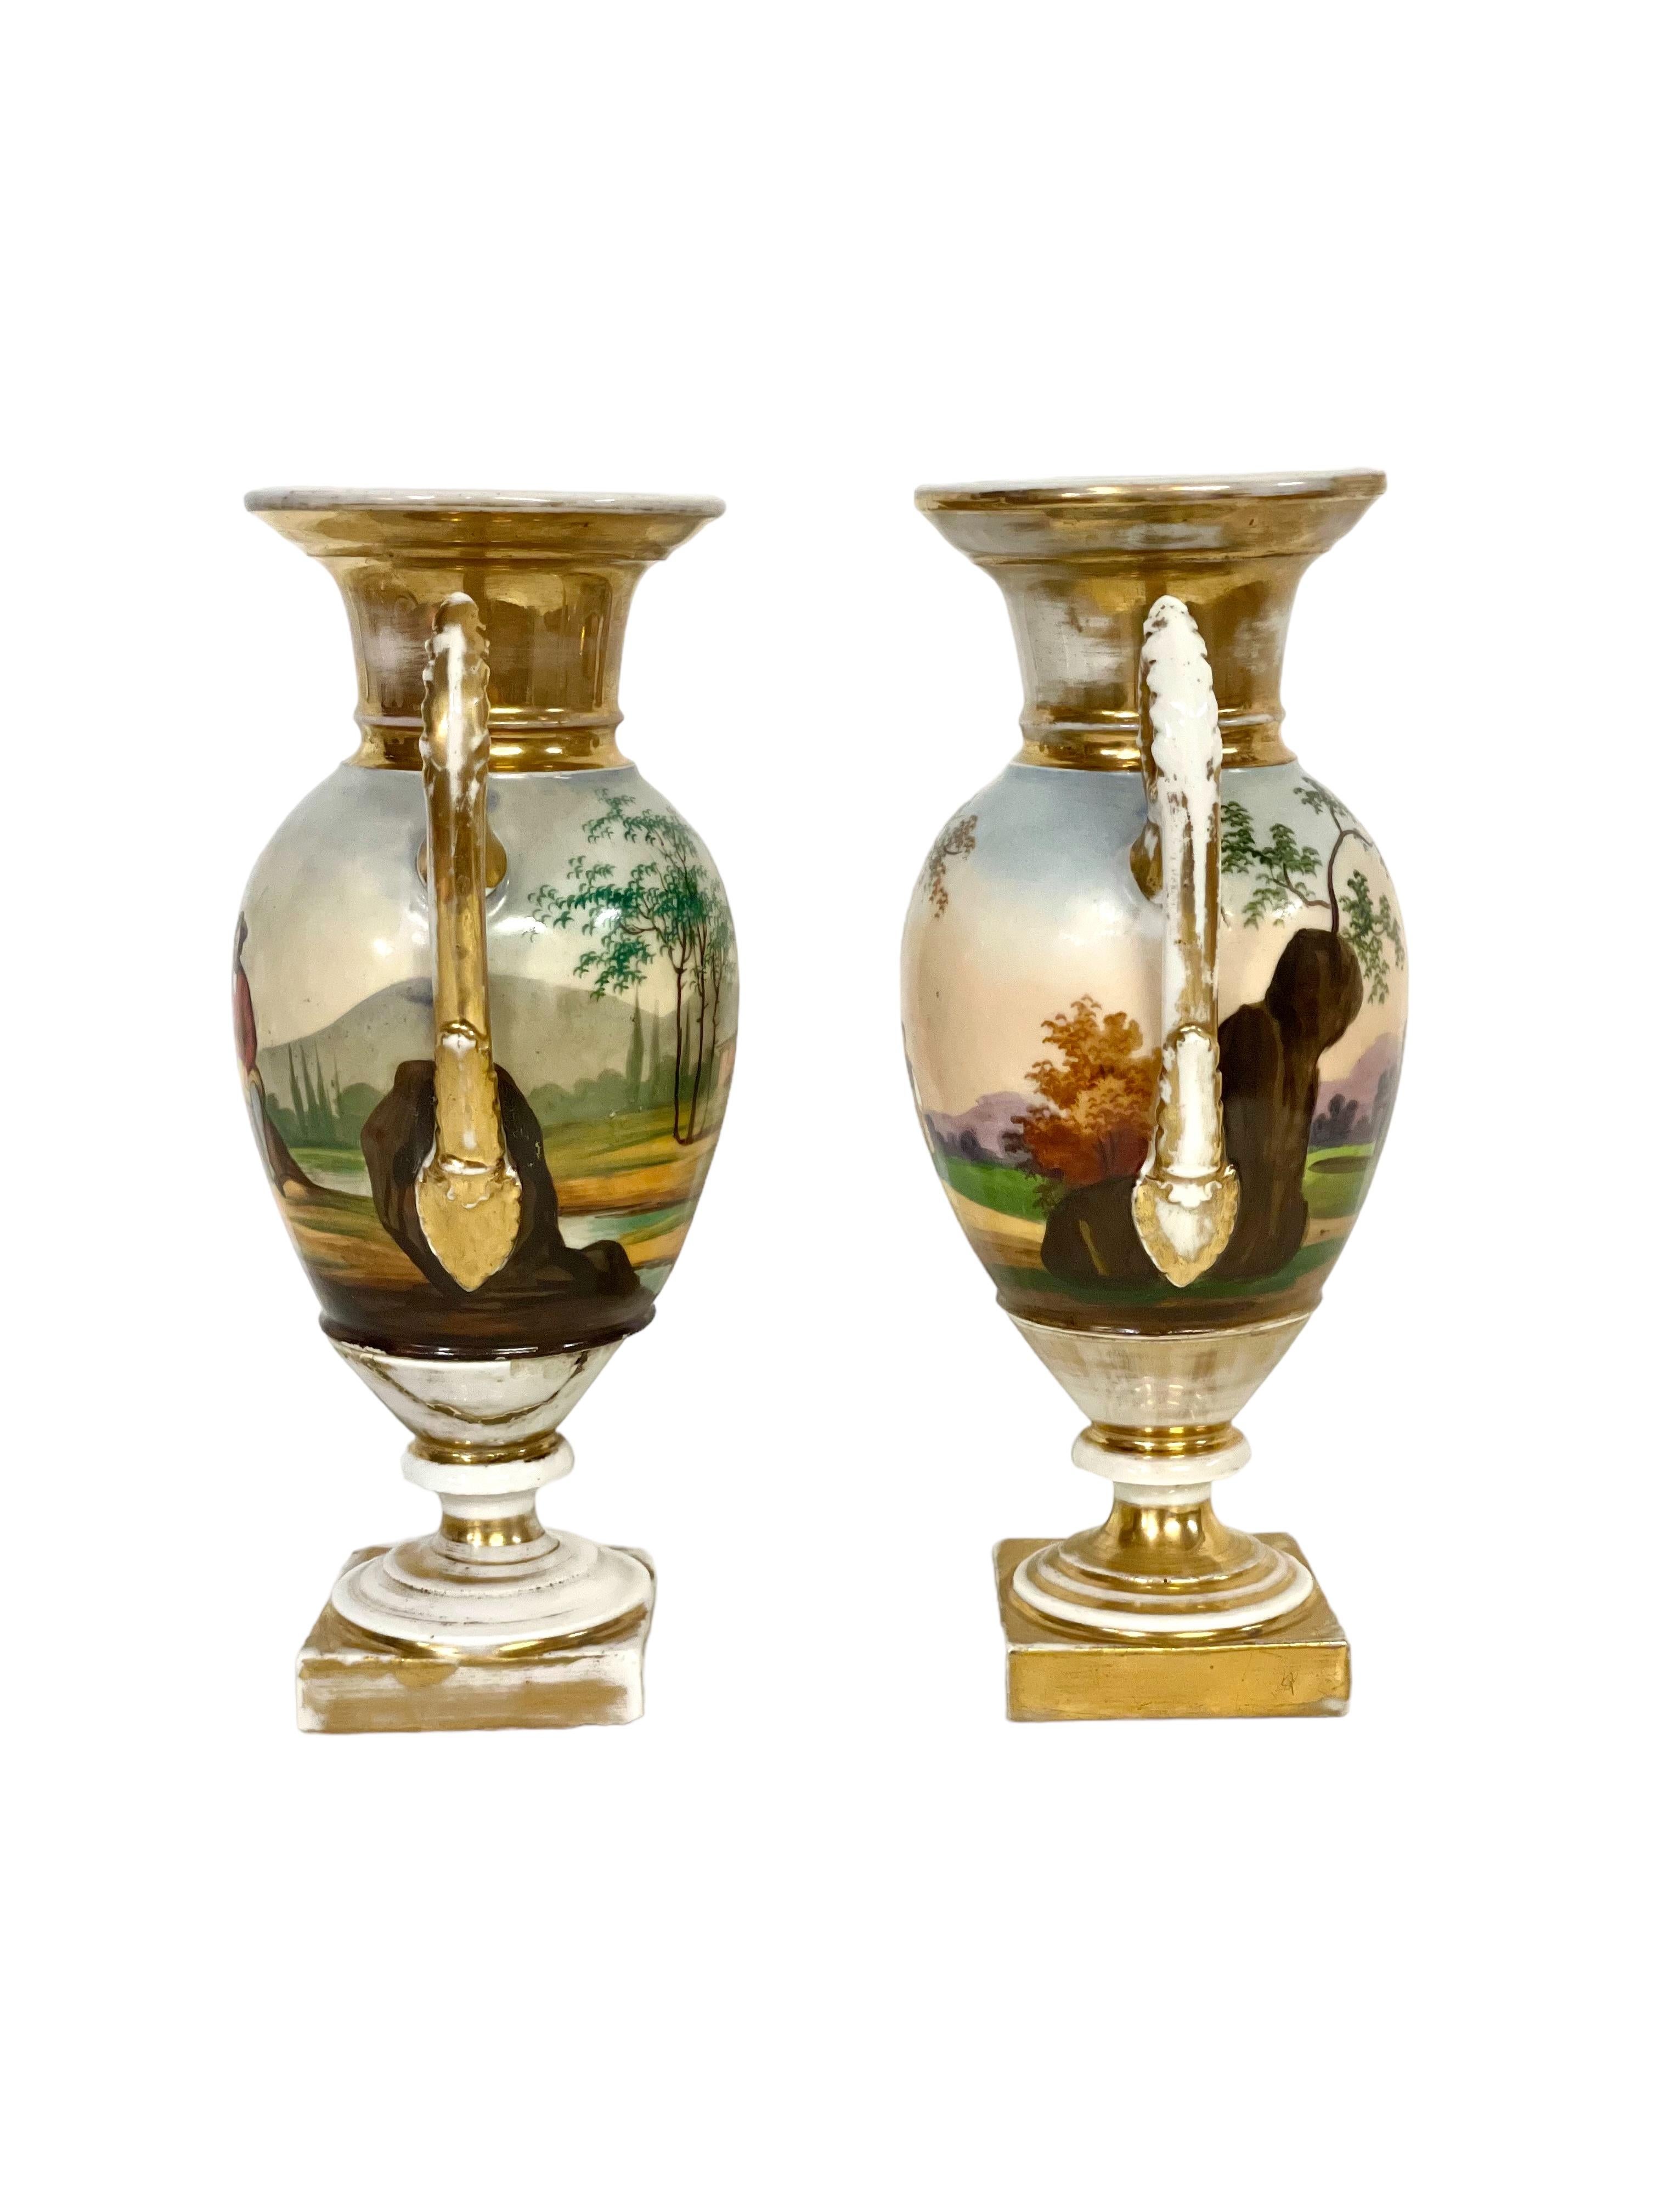 19th Century Pair of Hand-Painted Paris Porcelain Urns  For Sale 6